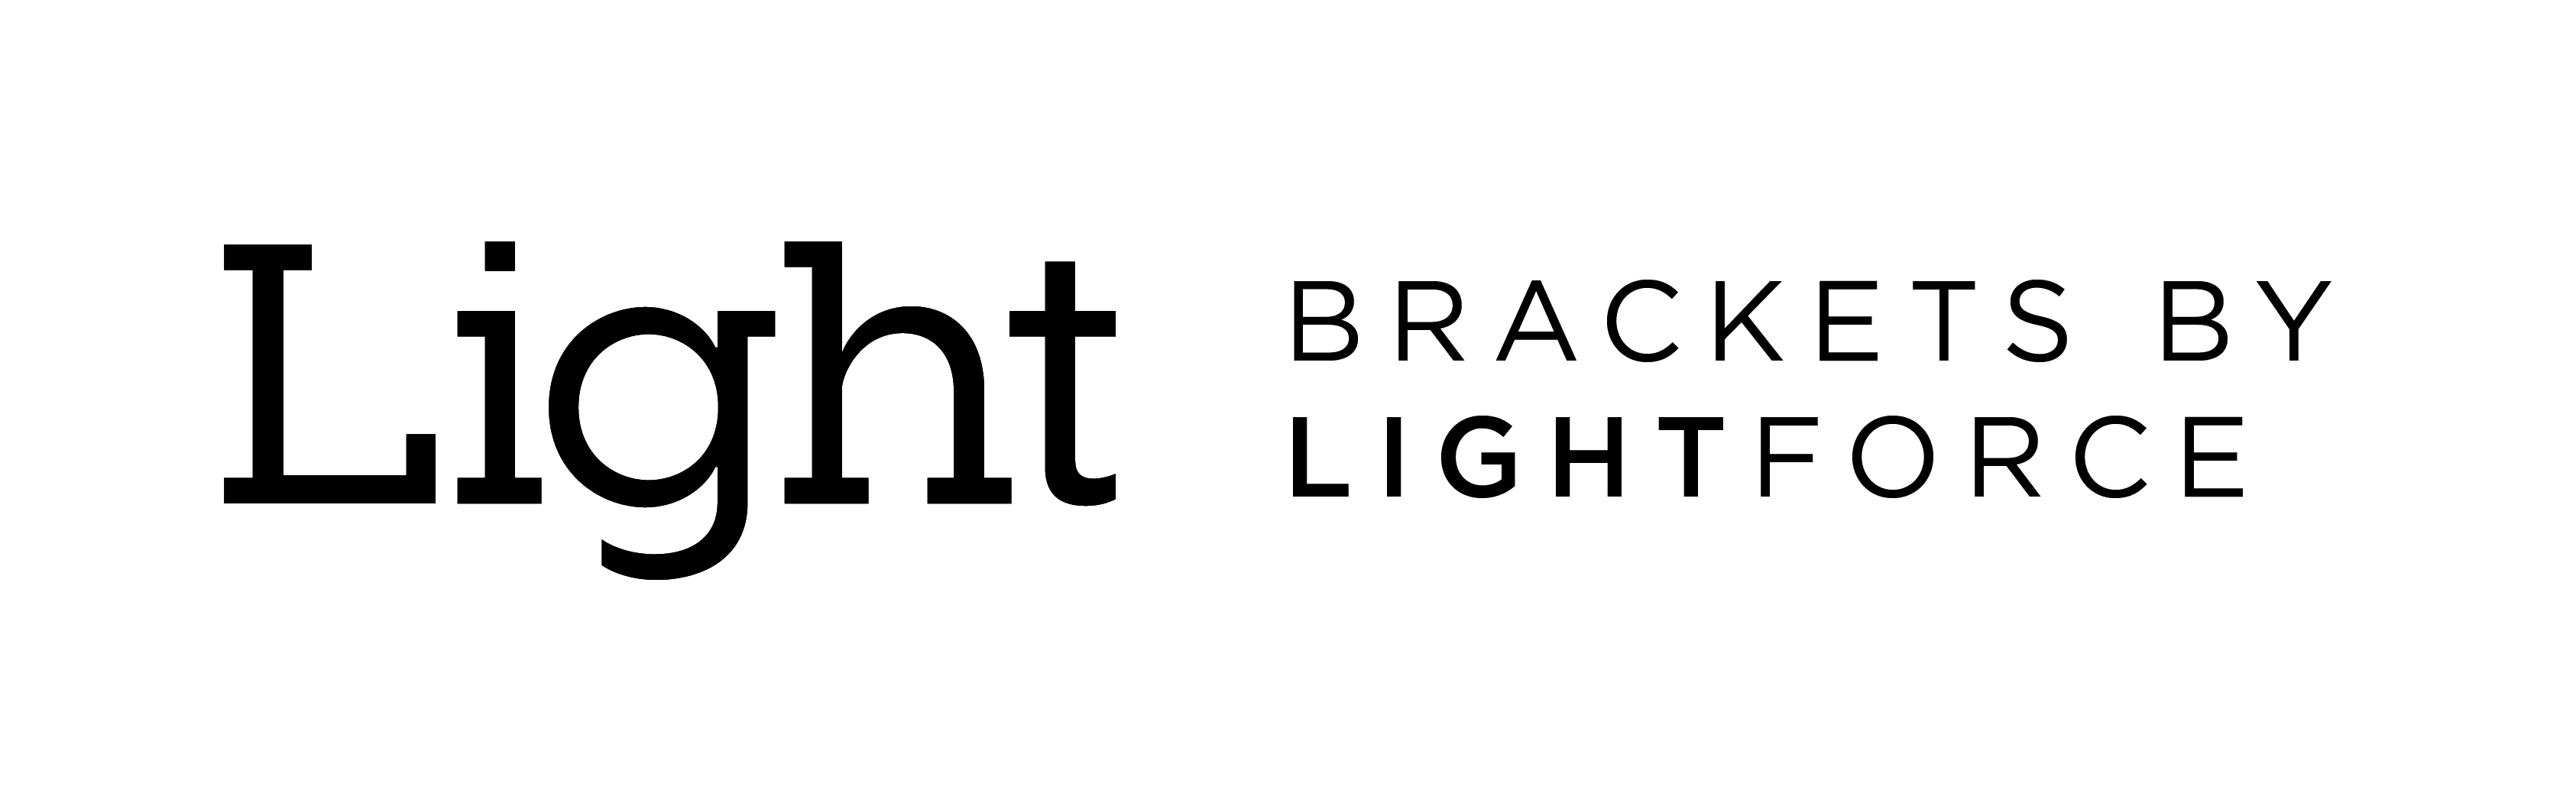 Black Light Bracket Logo Transp Background